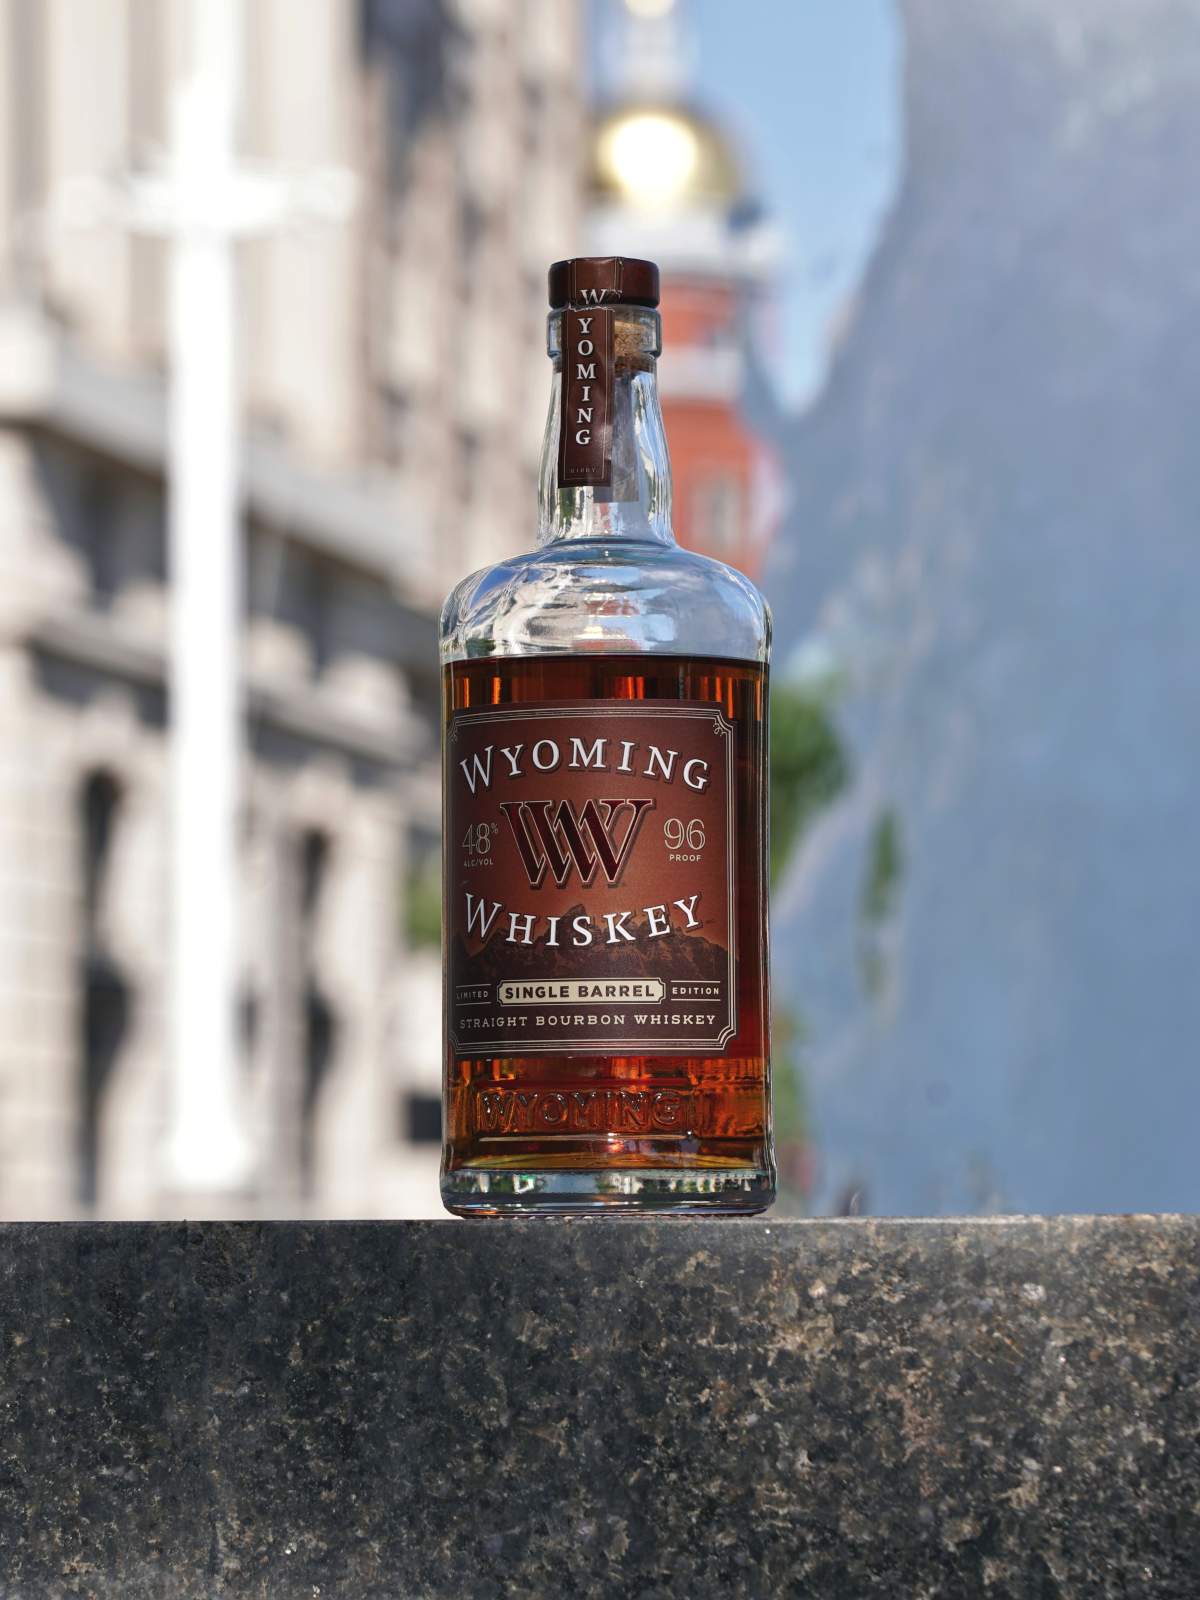 wyoming whiskey single barrel bourbon featured